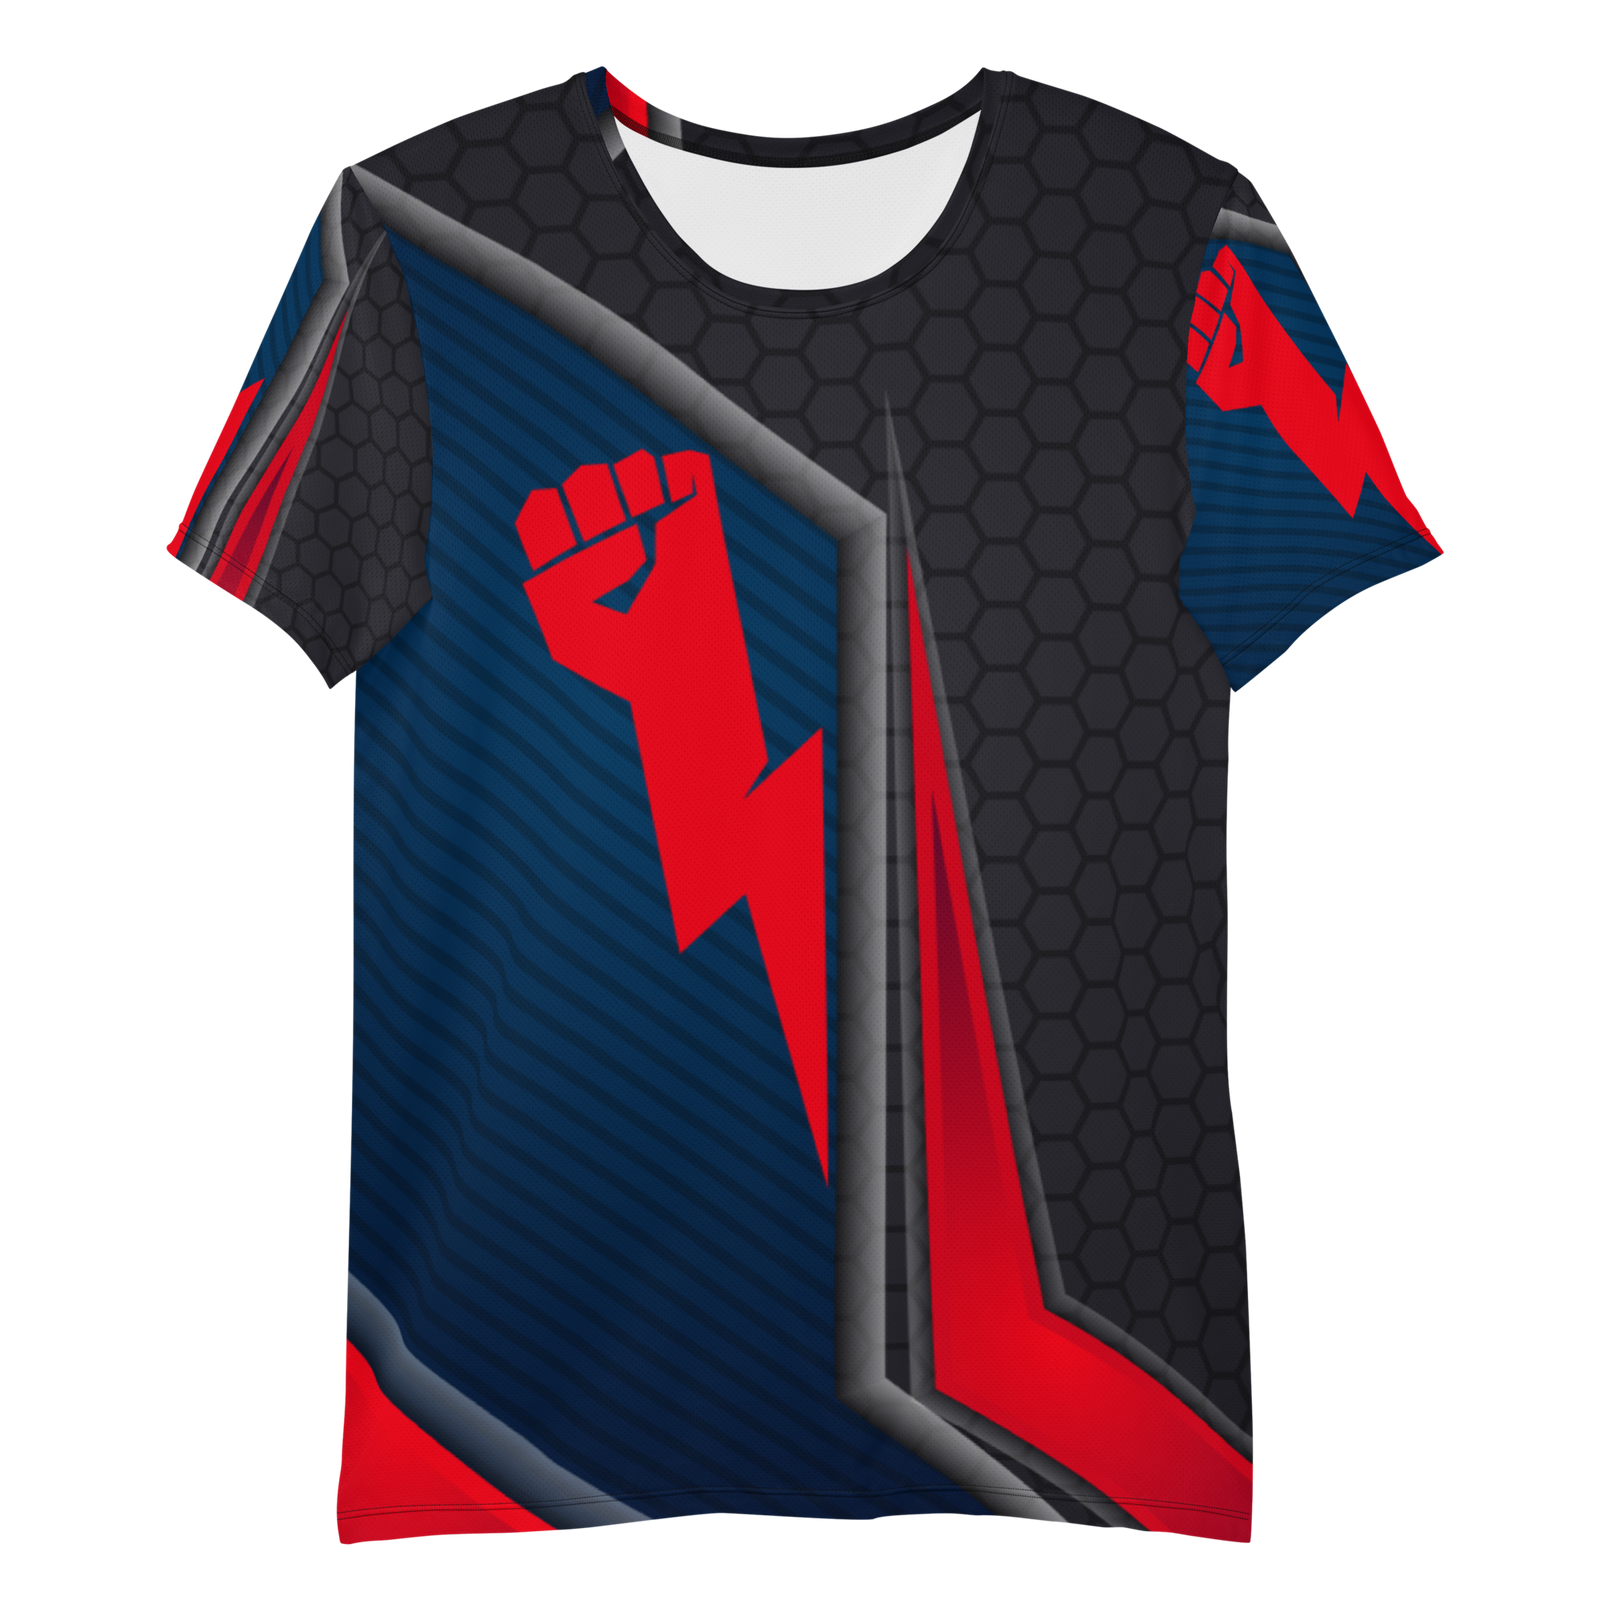 Strong Lightning Hand Men's Athletic Sport T-Shirt